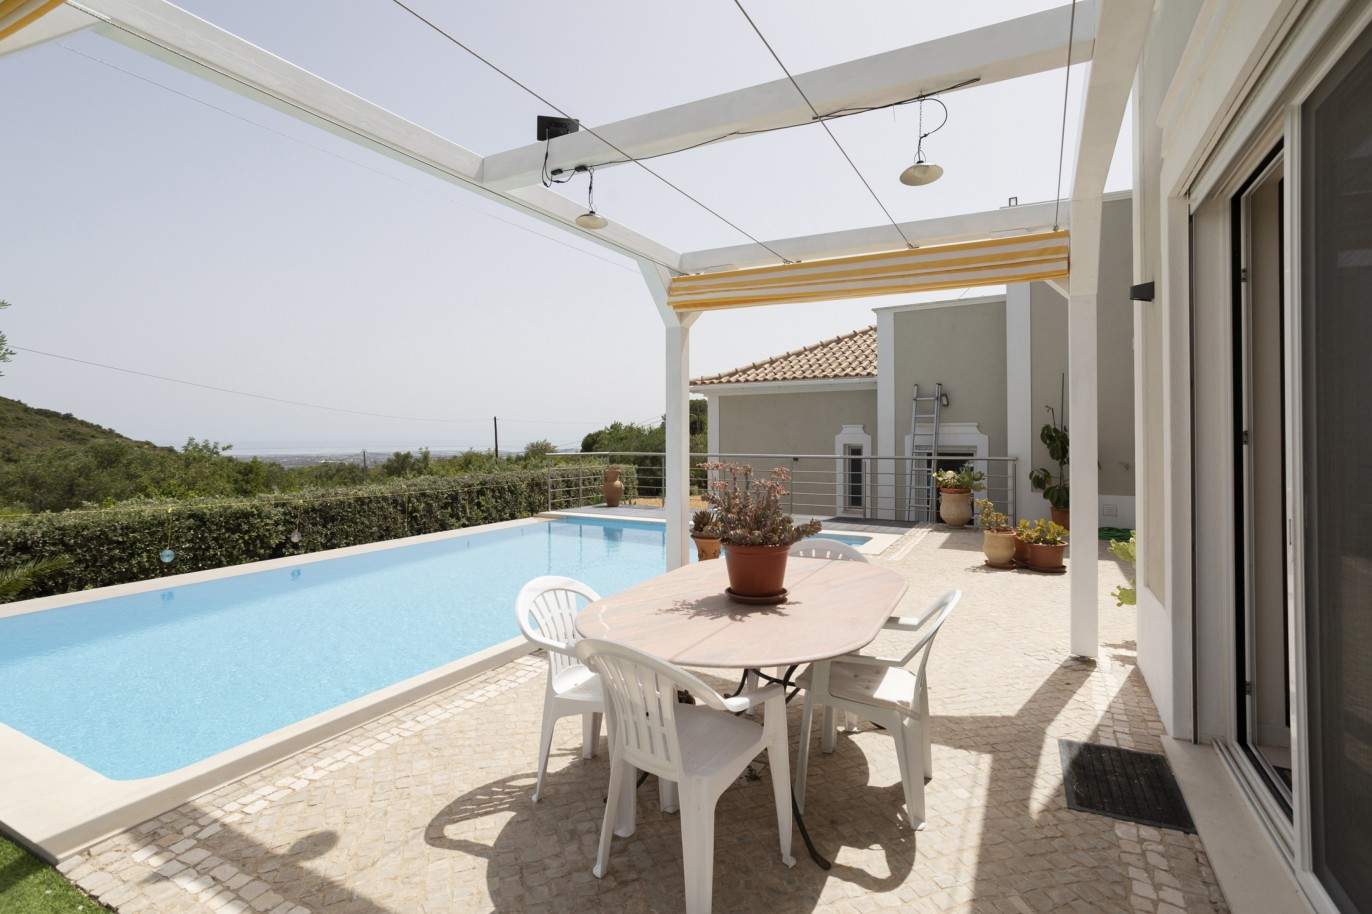 3 Bedroom Villa with swimming pool, for sale in Estoi, Algarve_201381